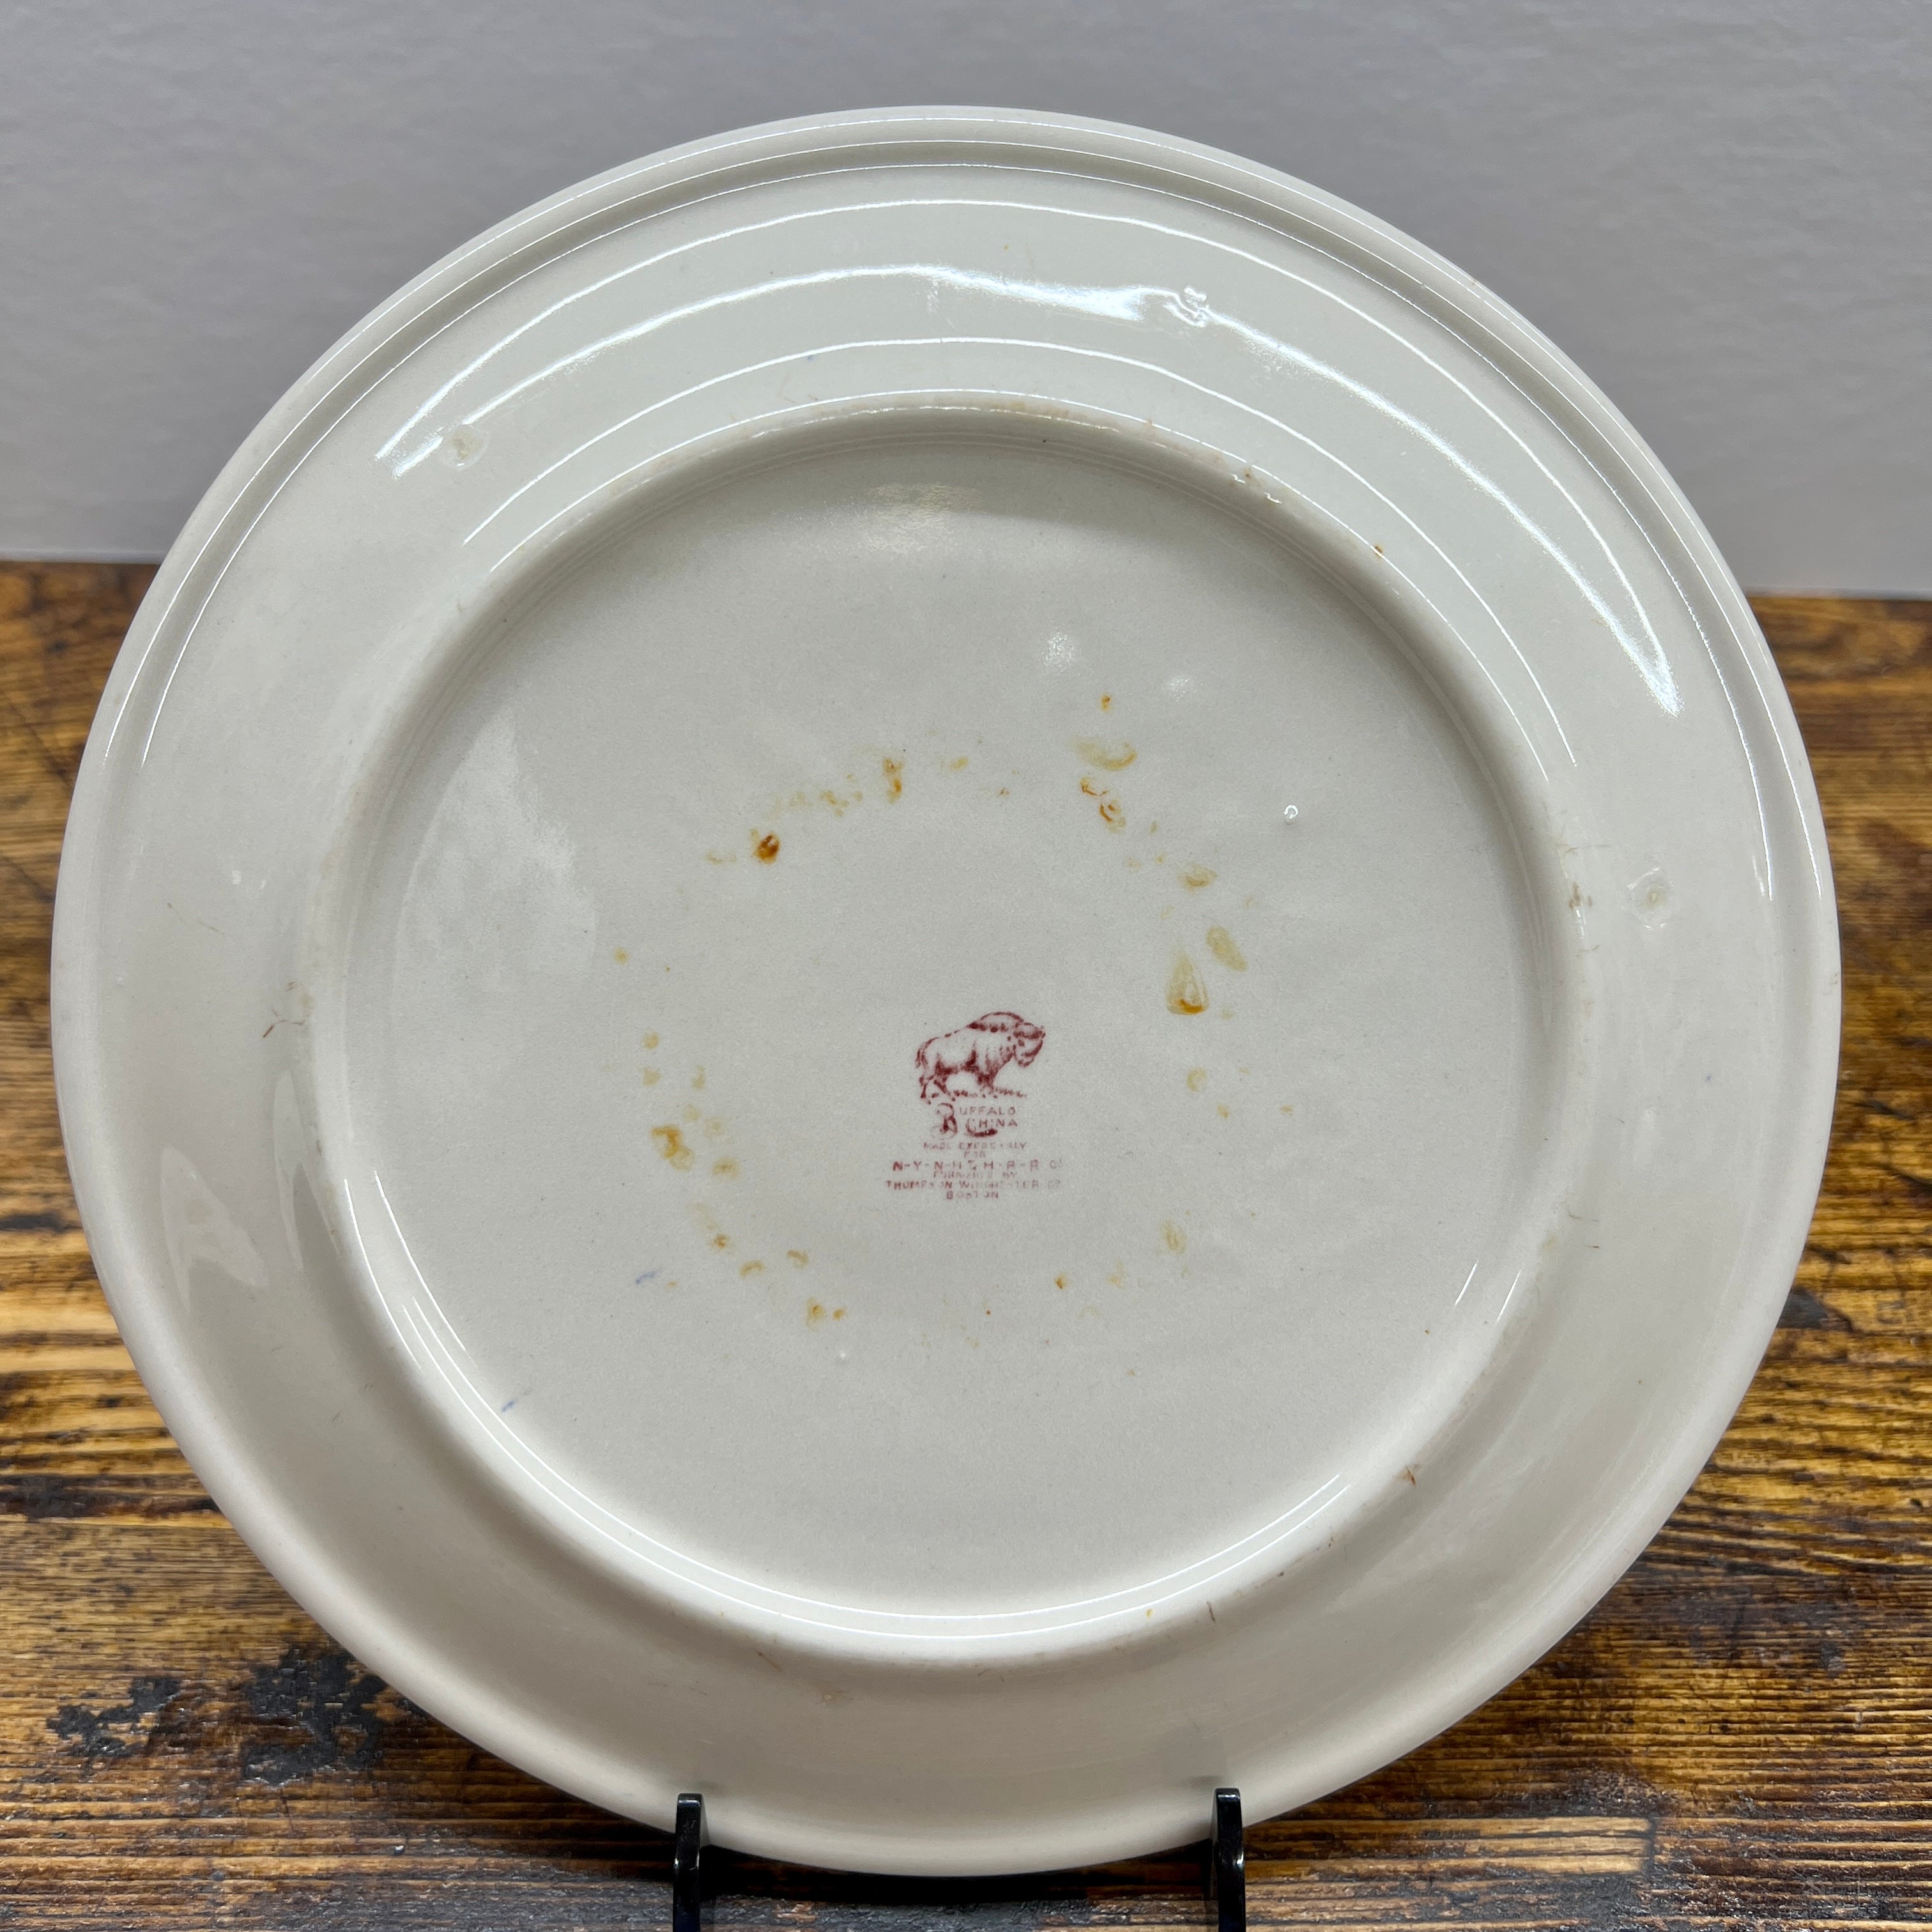 New York, New Haven & Hartford Railroad Souvenir China Plate (ver. 1)